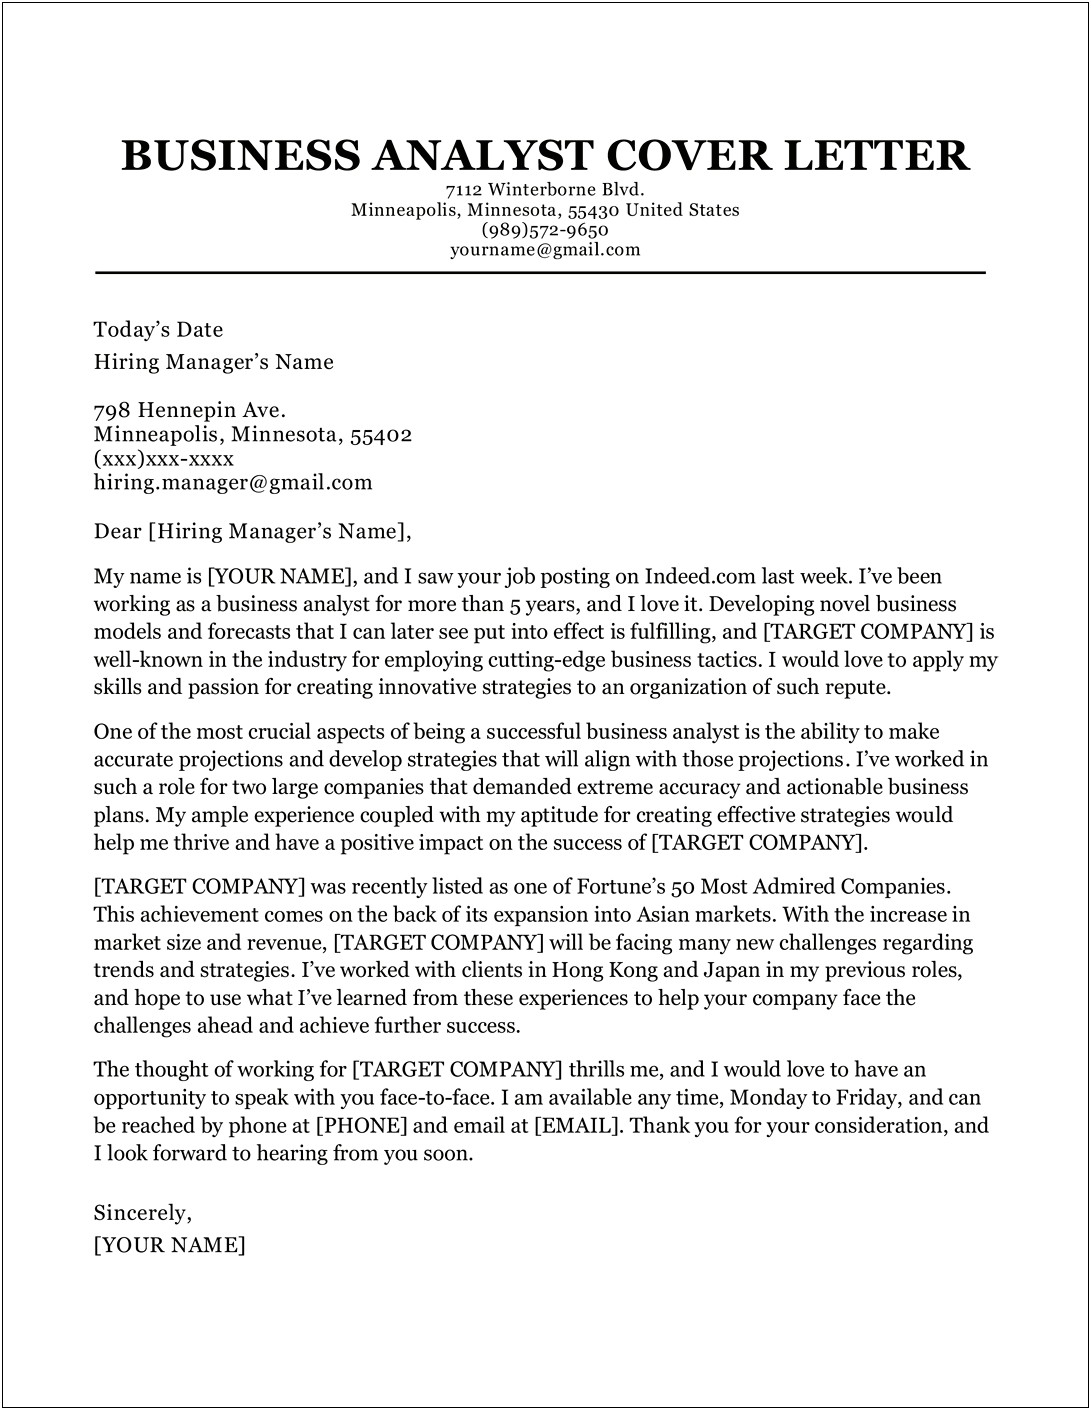 Sample Cover Letter For Business Analyst Resume